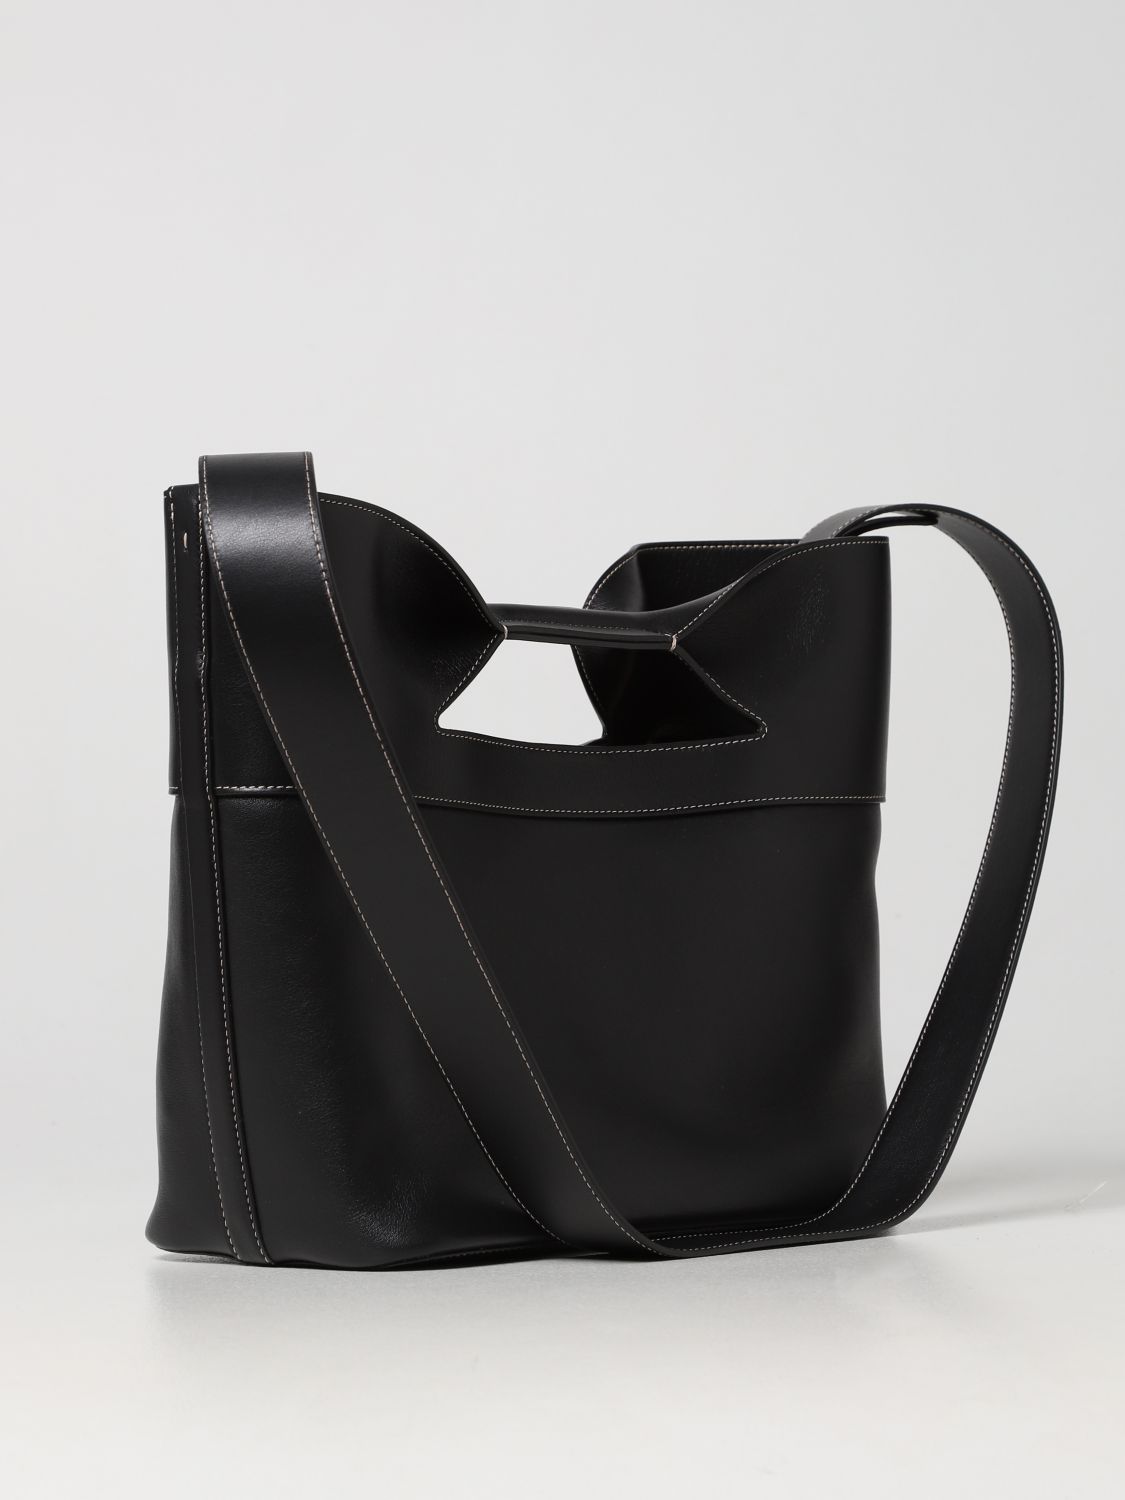 ALEXANDER MCQUEEN: The Bow S leather bag - Black | Handbag Alexander ...